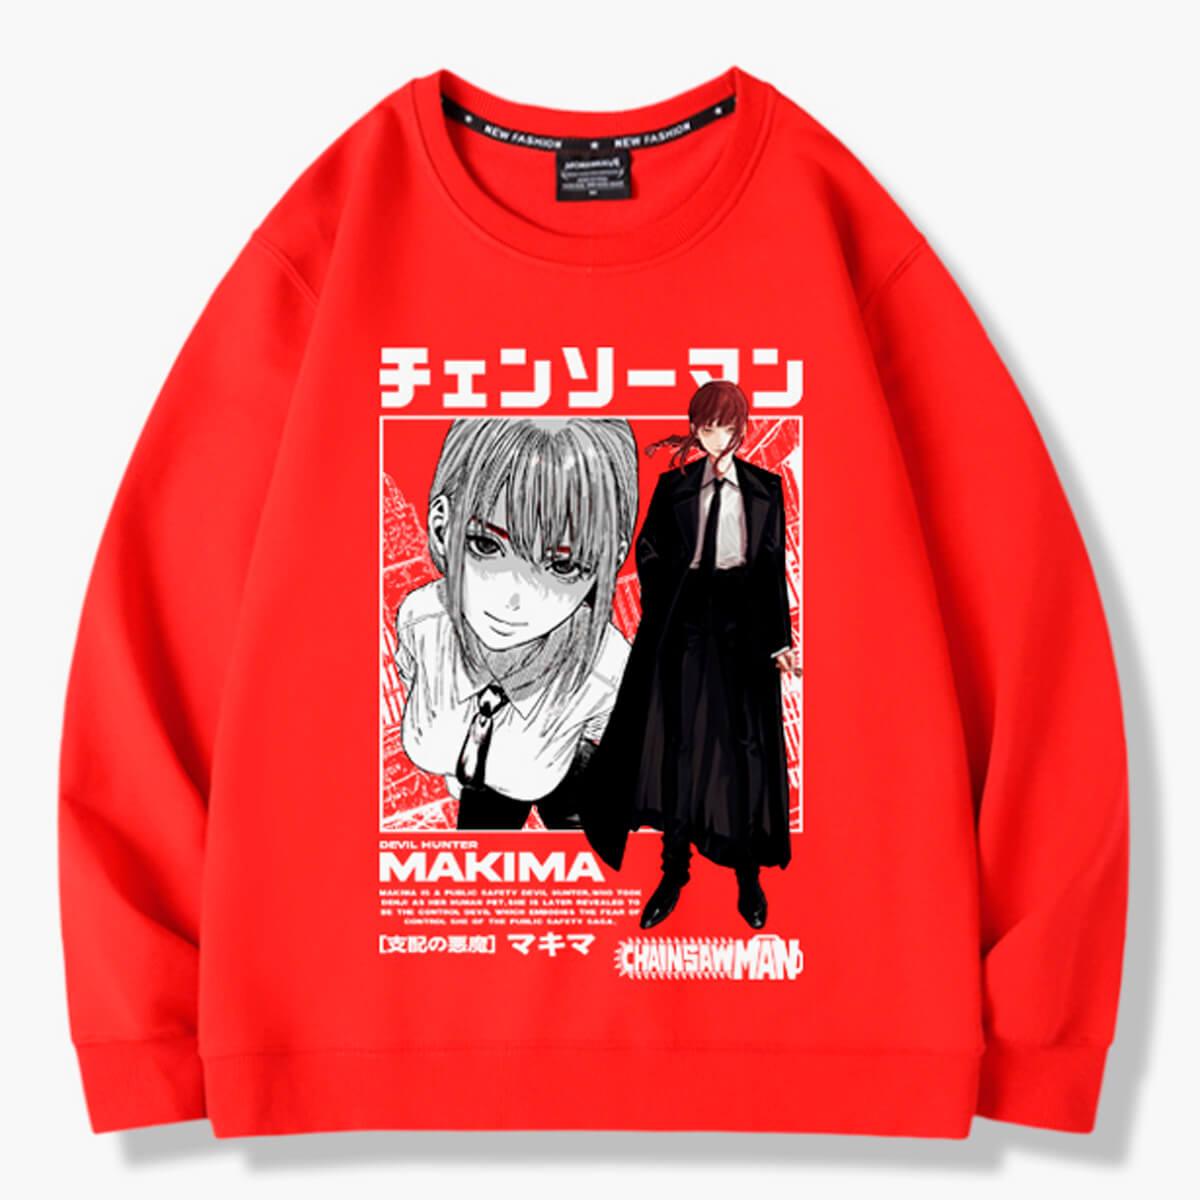 Makima Chainsaw Man Manga Sweatshirt - Aesthetic Clothes Shop